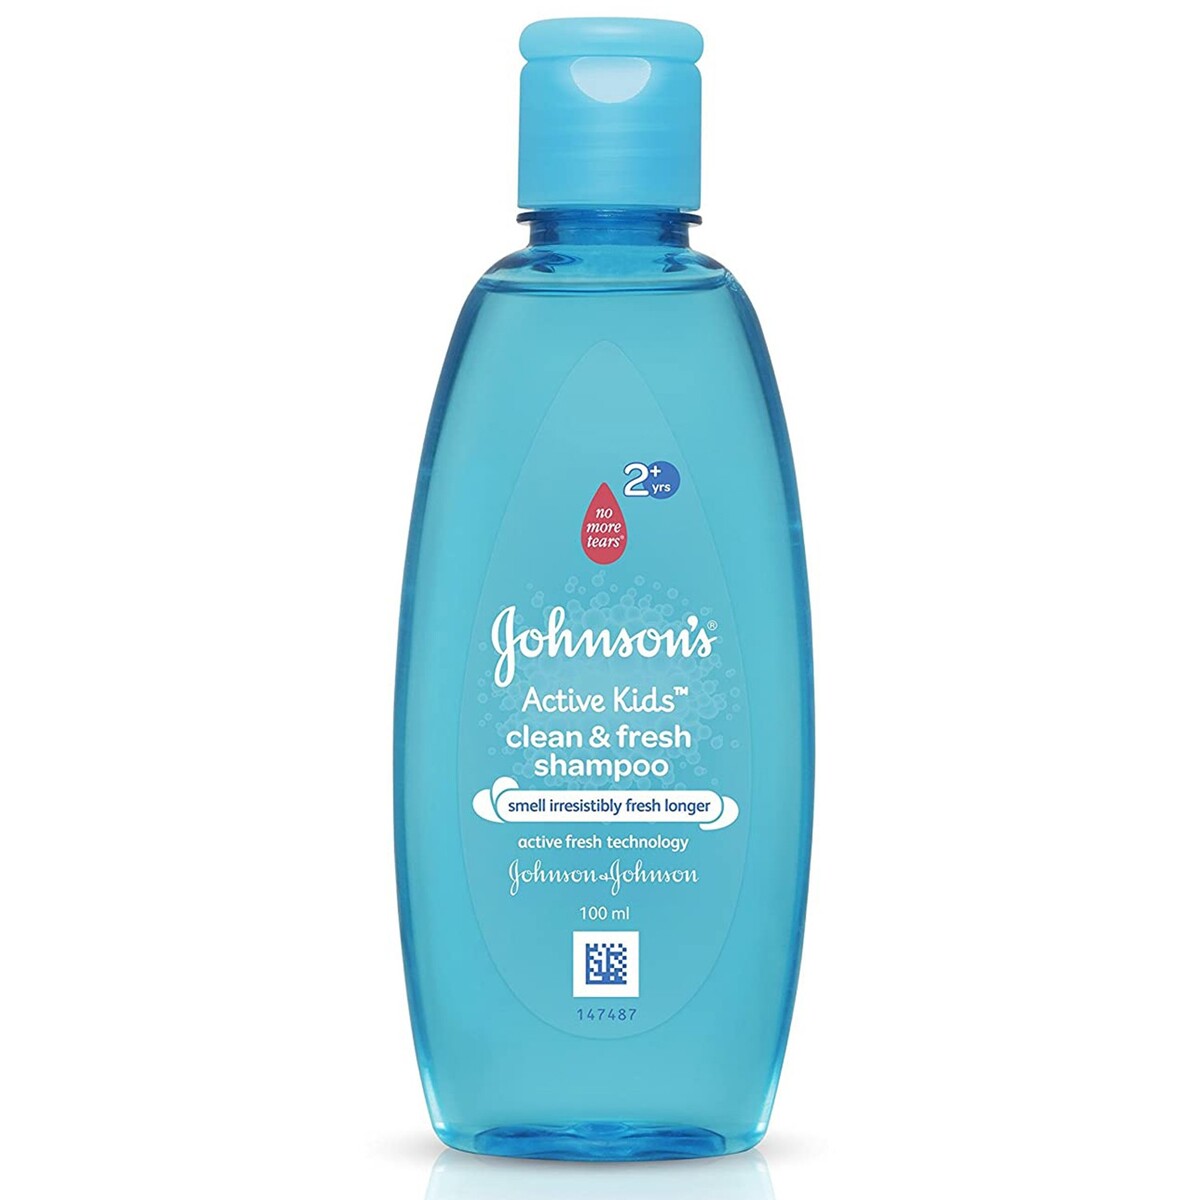 Johnson & Johnson Shampoo Active Kids Clean & Fresh 100ml